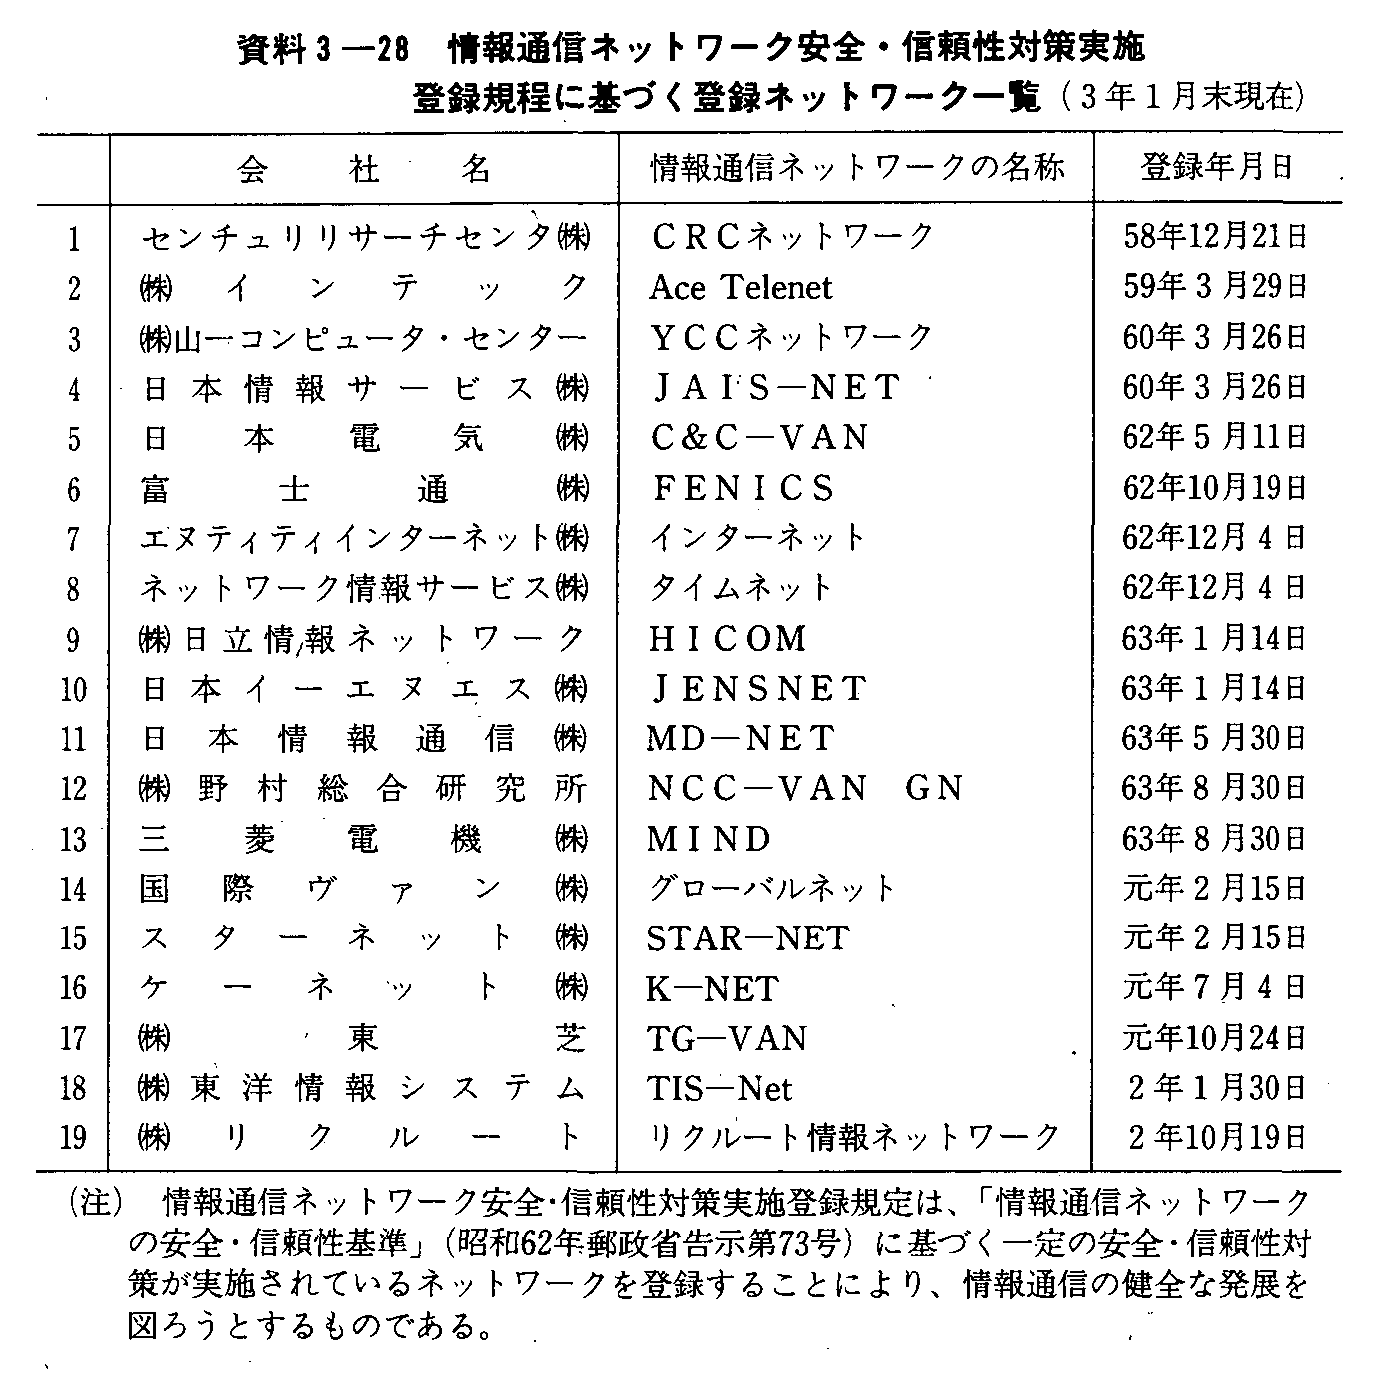 3-28 ʐMlbg[NSEM΍{ o^KɊÂo^lbg[Nꗗ(3N1)